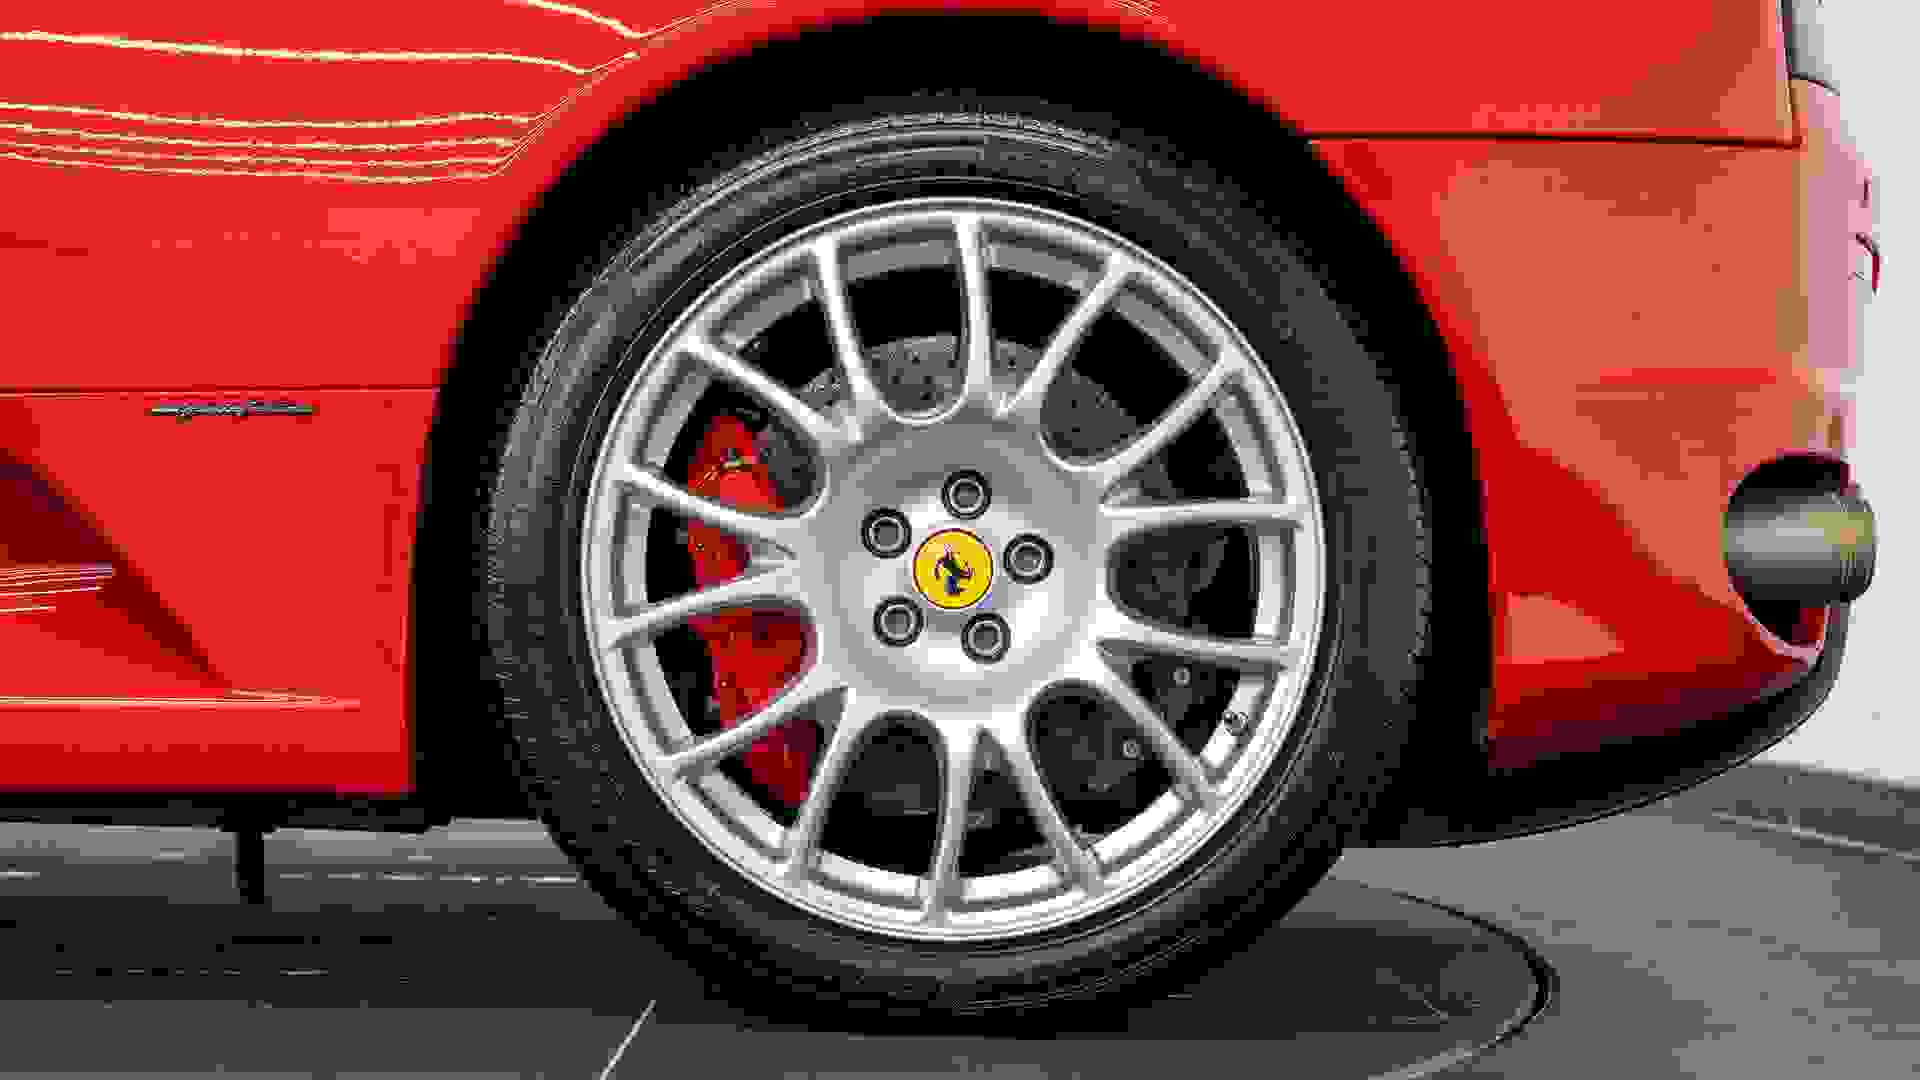 Ferrari F430 Spider Photo 246cee5f-e503-4765-a281-8eff31564b8b.jpg